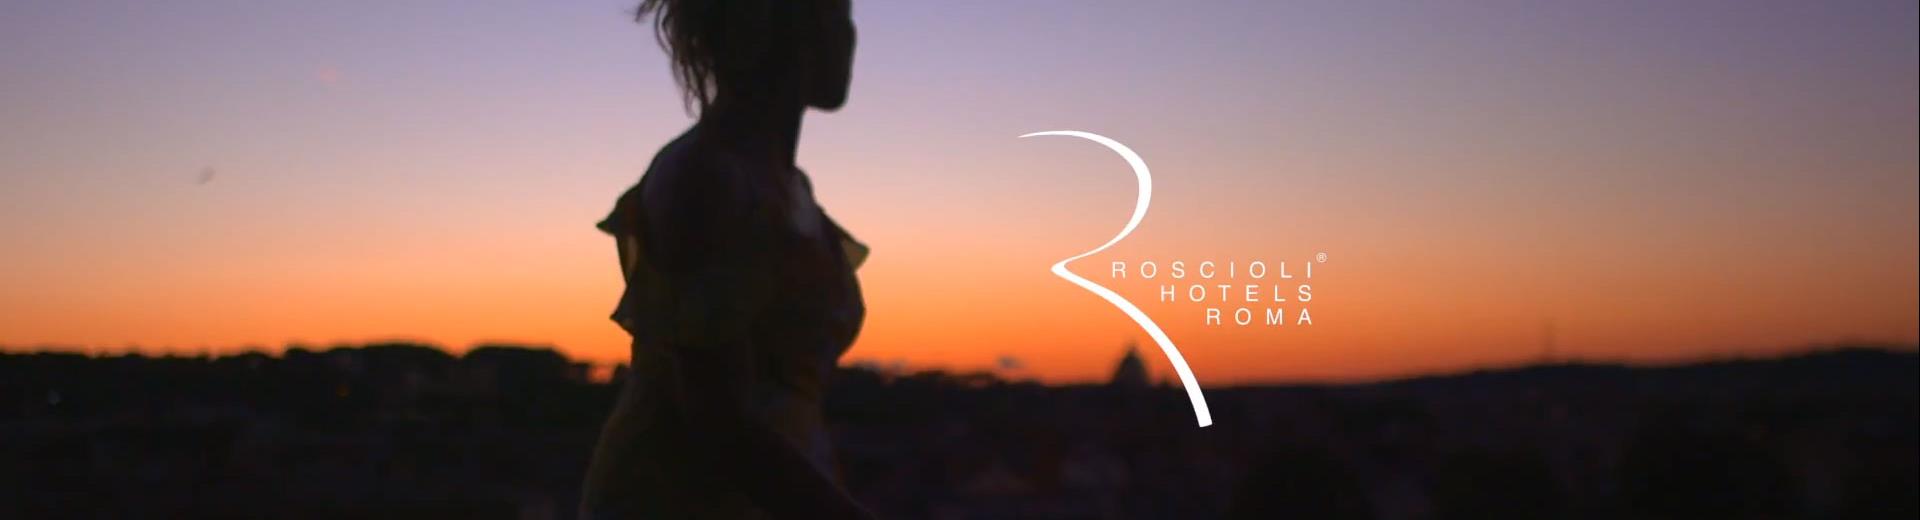 Roscioli Hotel Roma